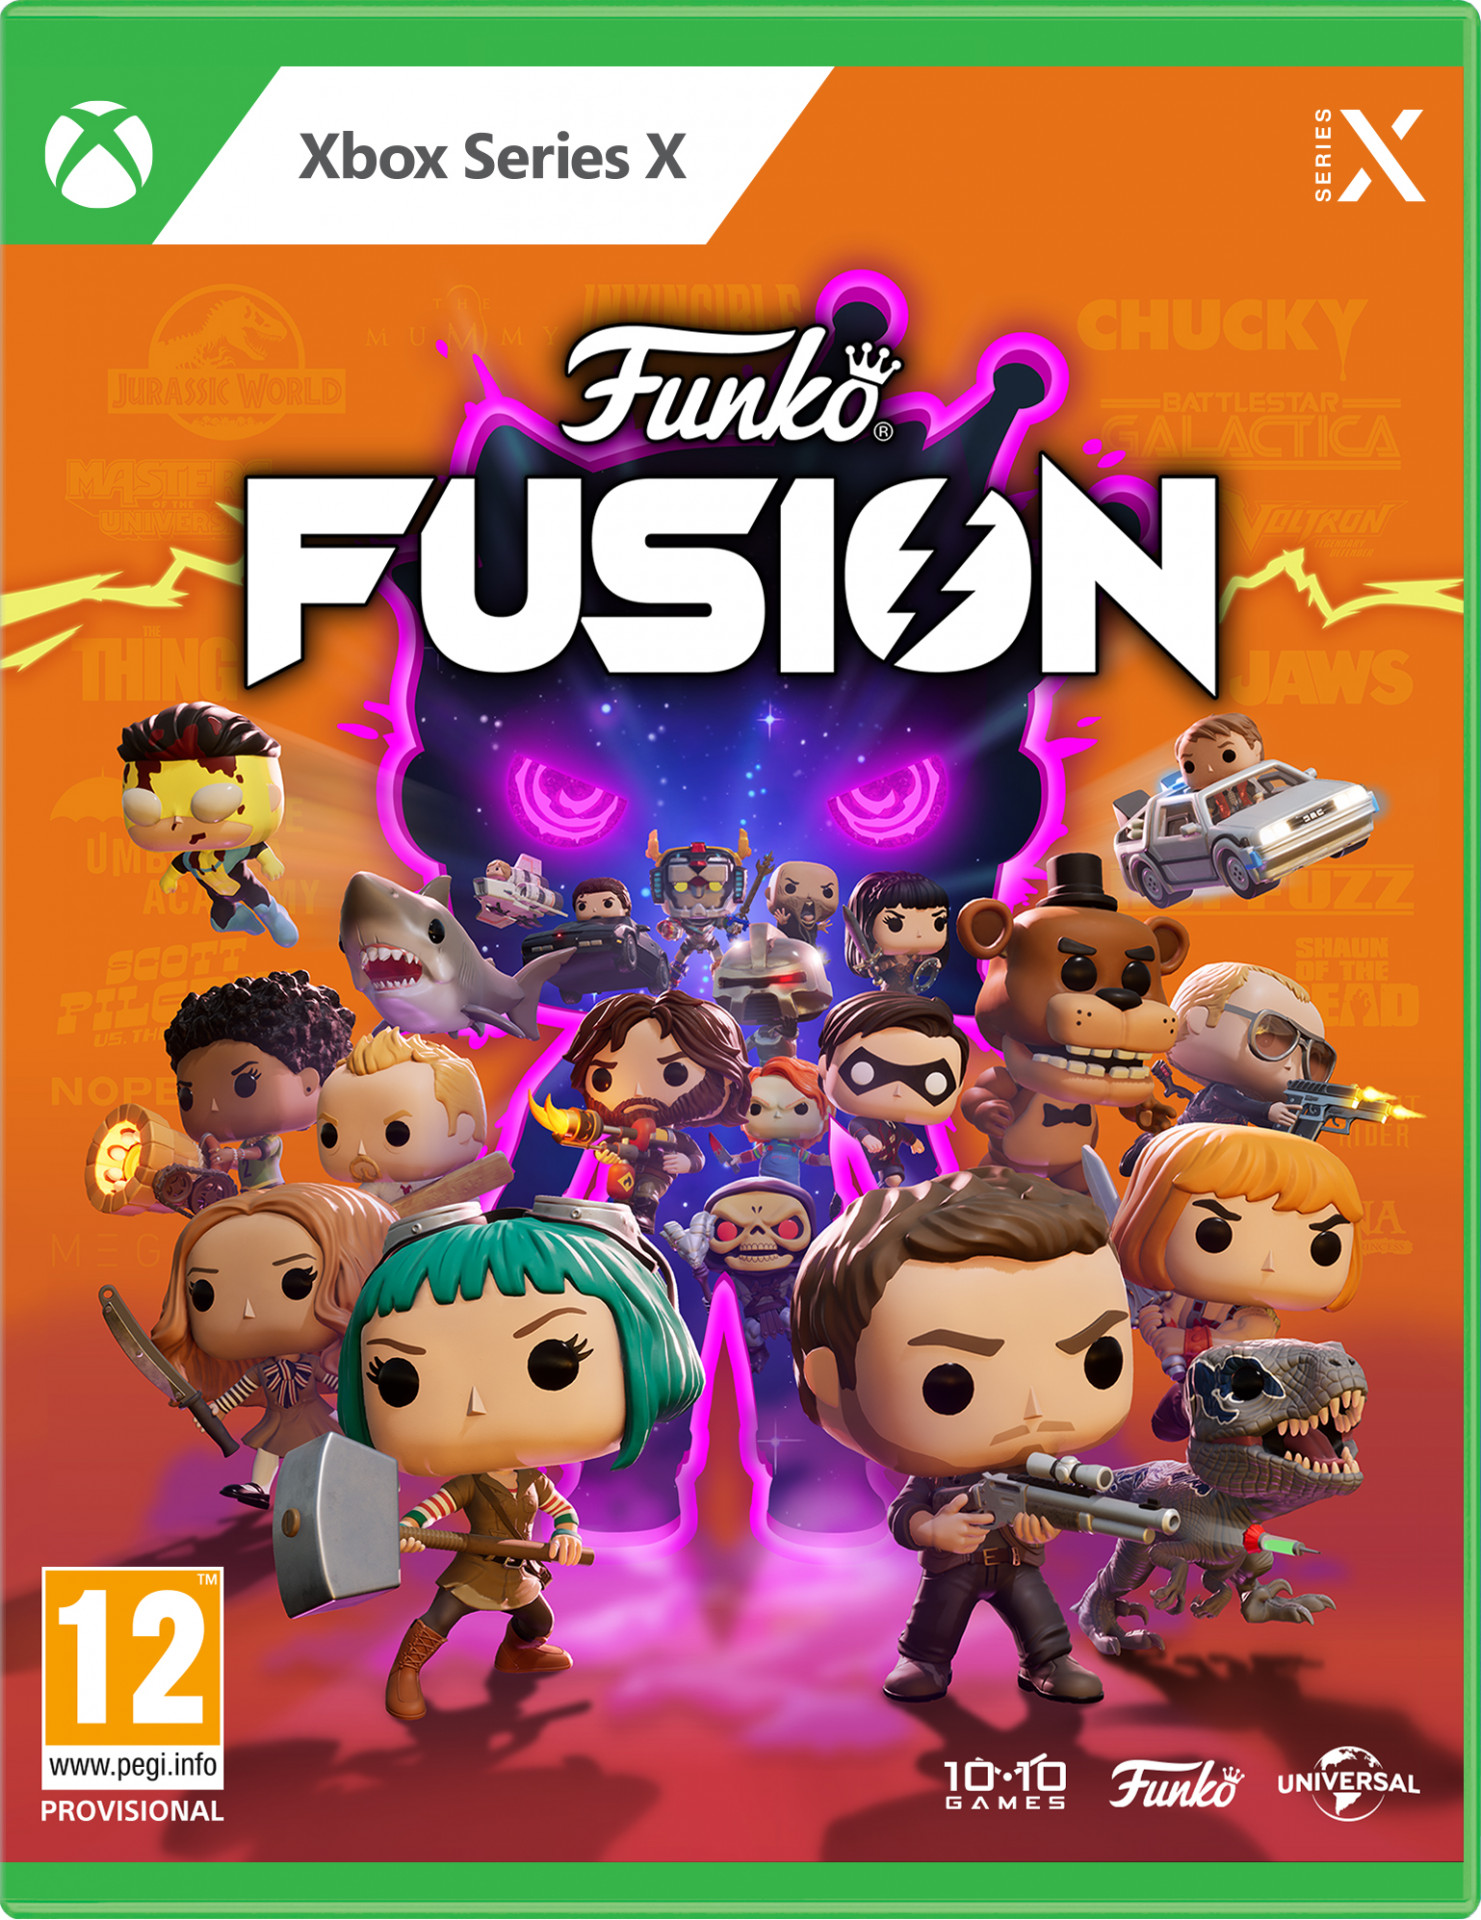 Funko Fusion (Xbox Series X), 10:10 Games Limited